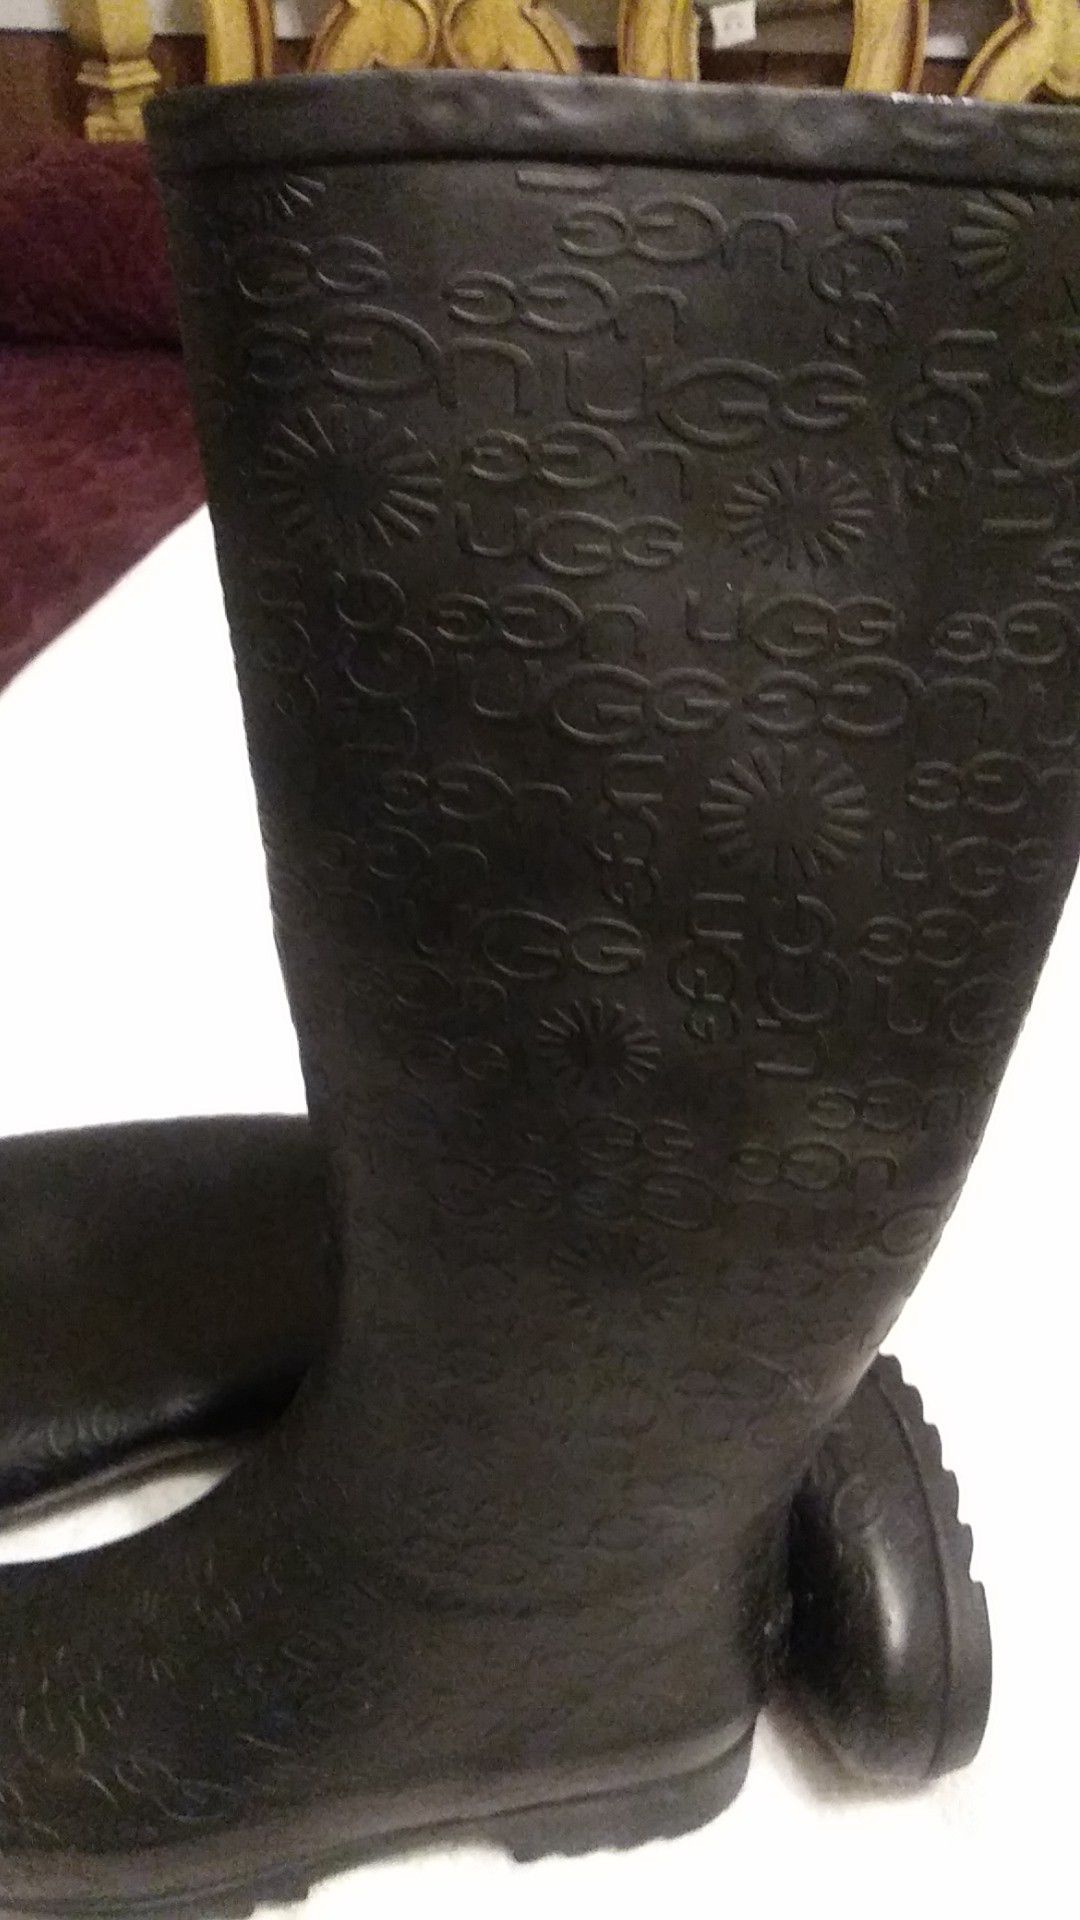 Uggs rain boots